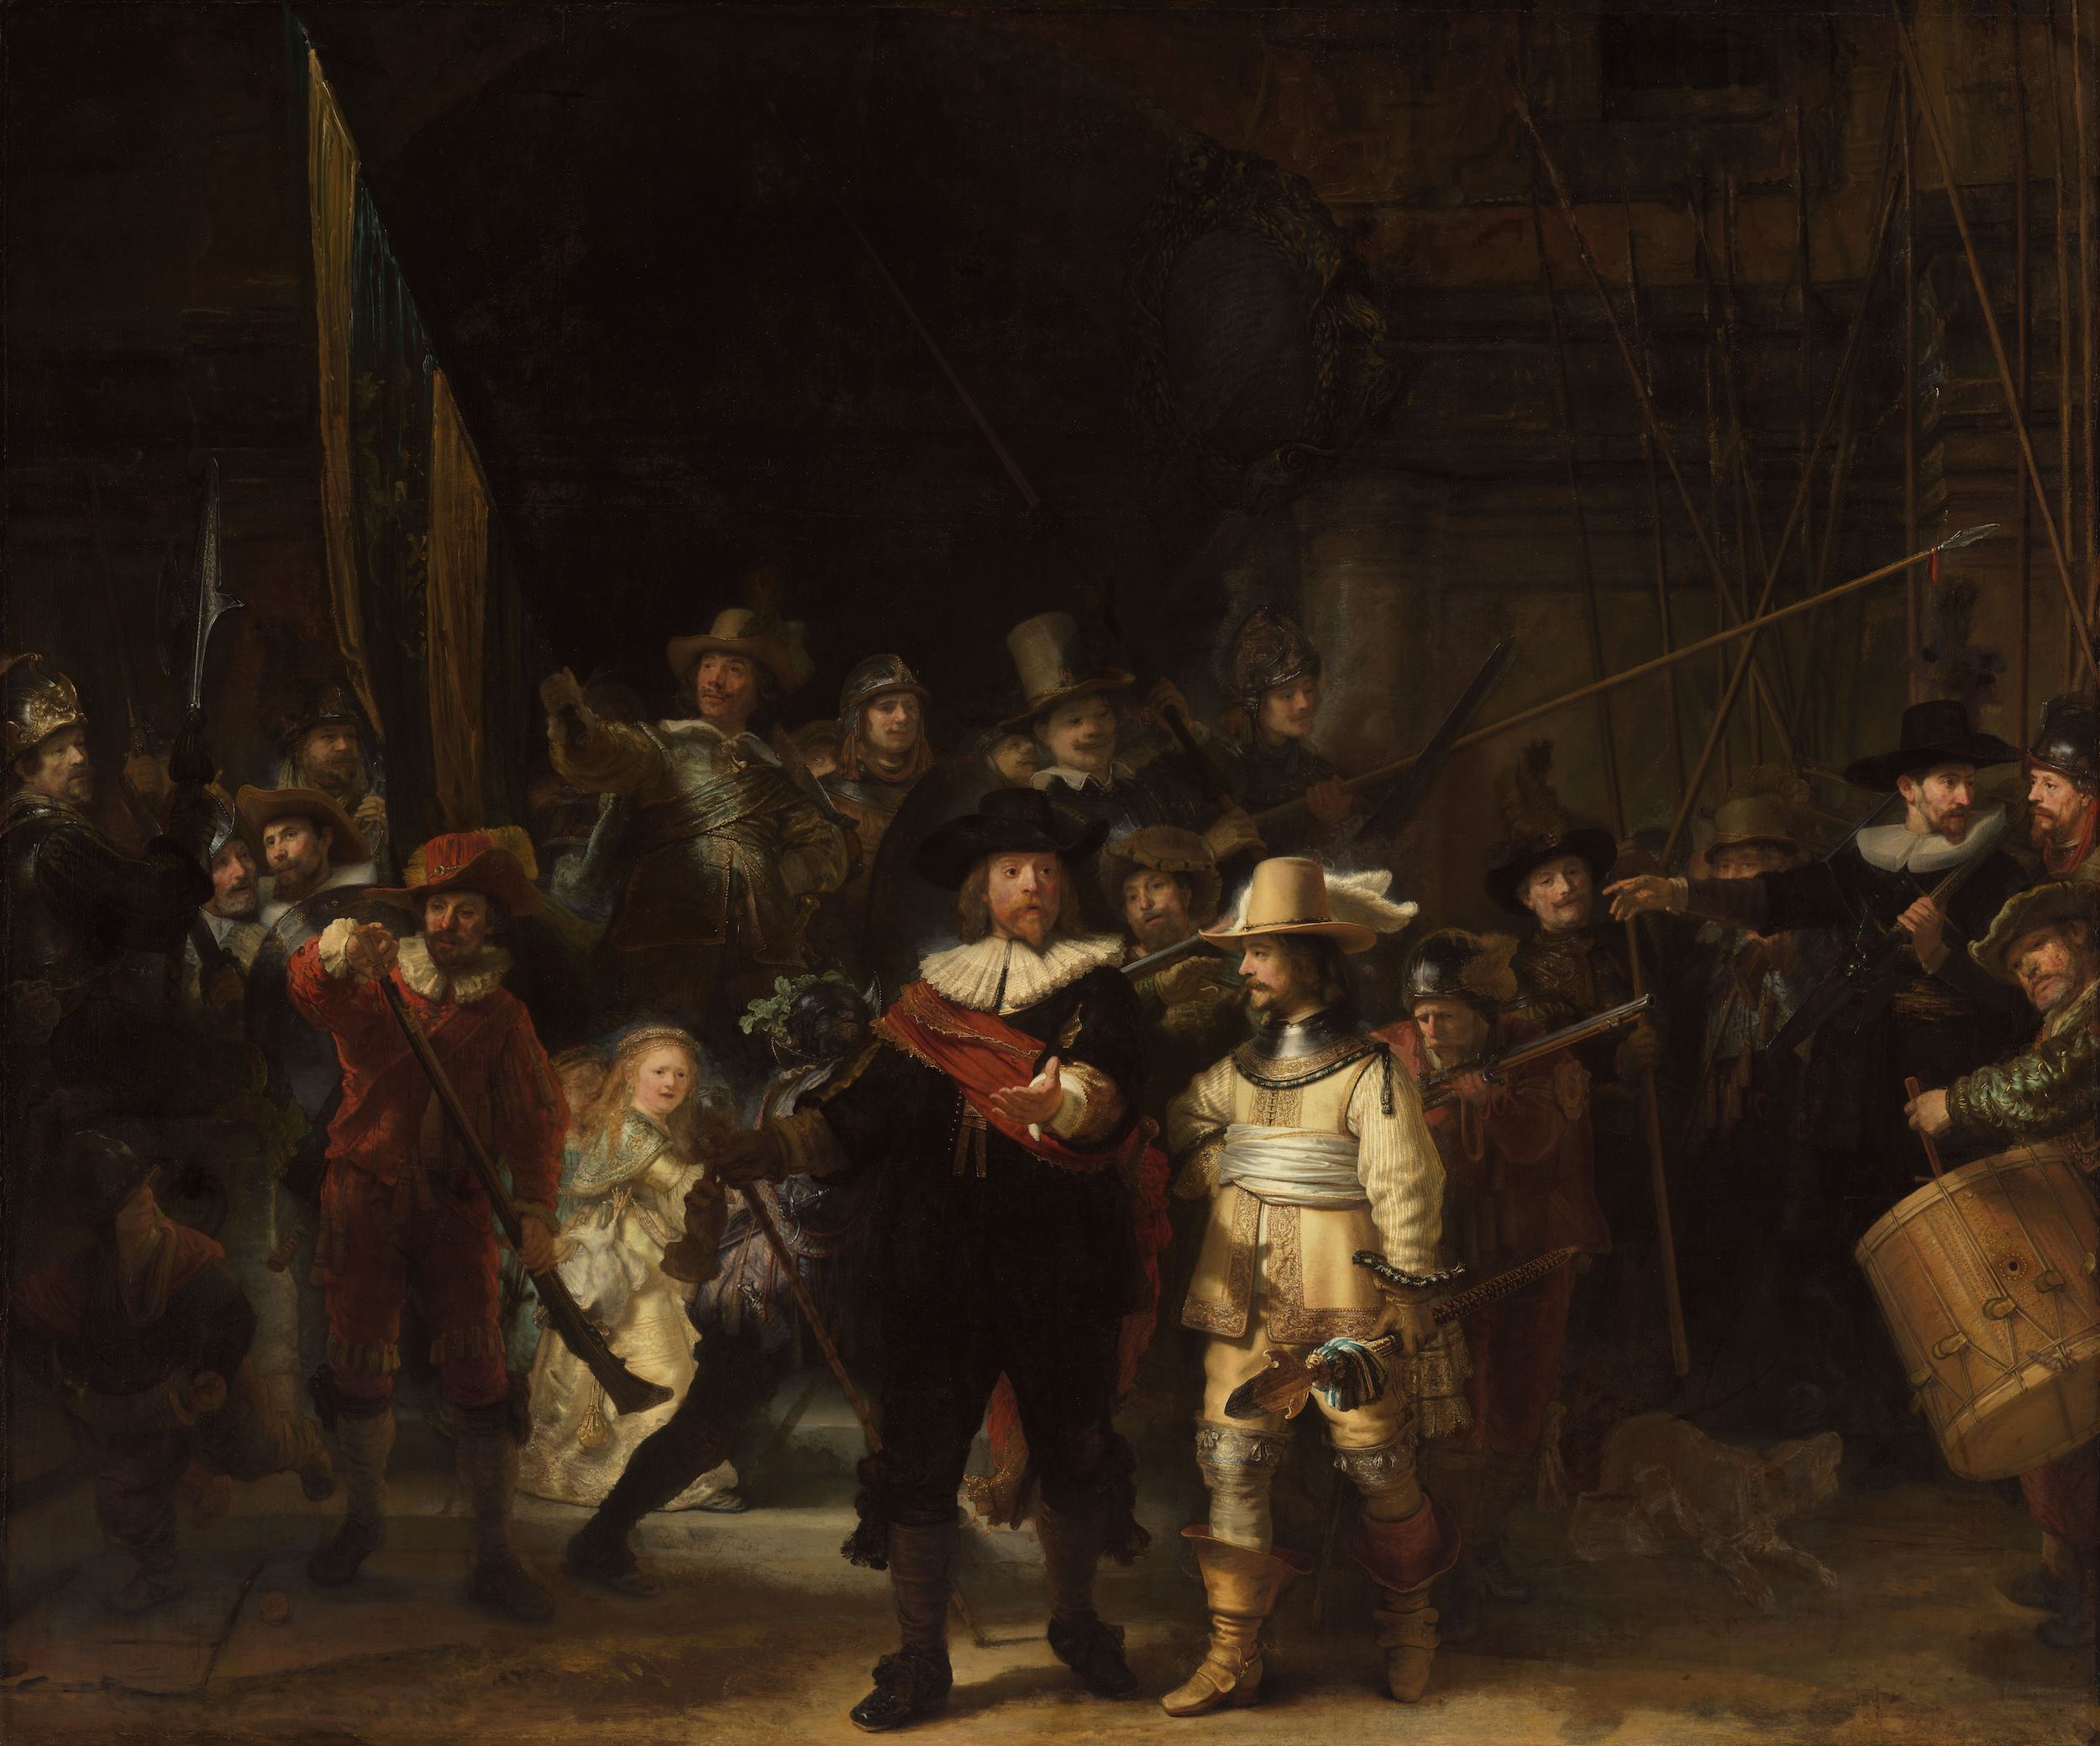 夜警 by Rembrandt van Rijn - 1642年 - 379.5 × 453.5 cm 